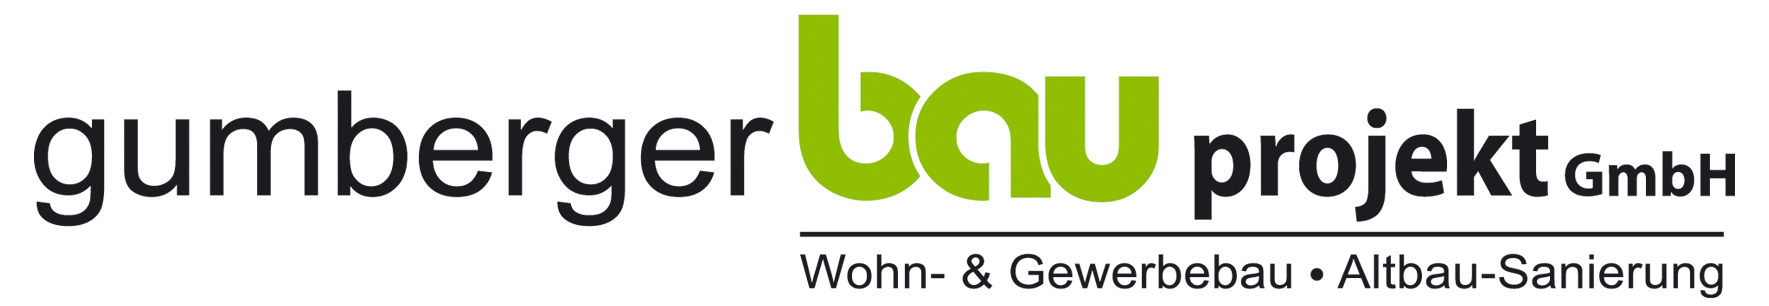 gumberger bau projekt GmbH